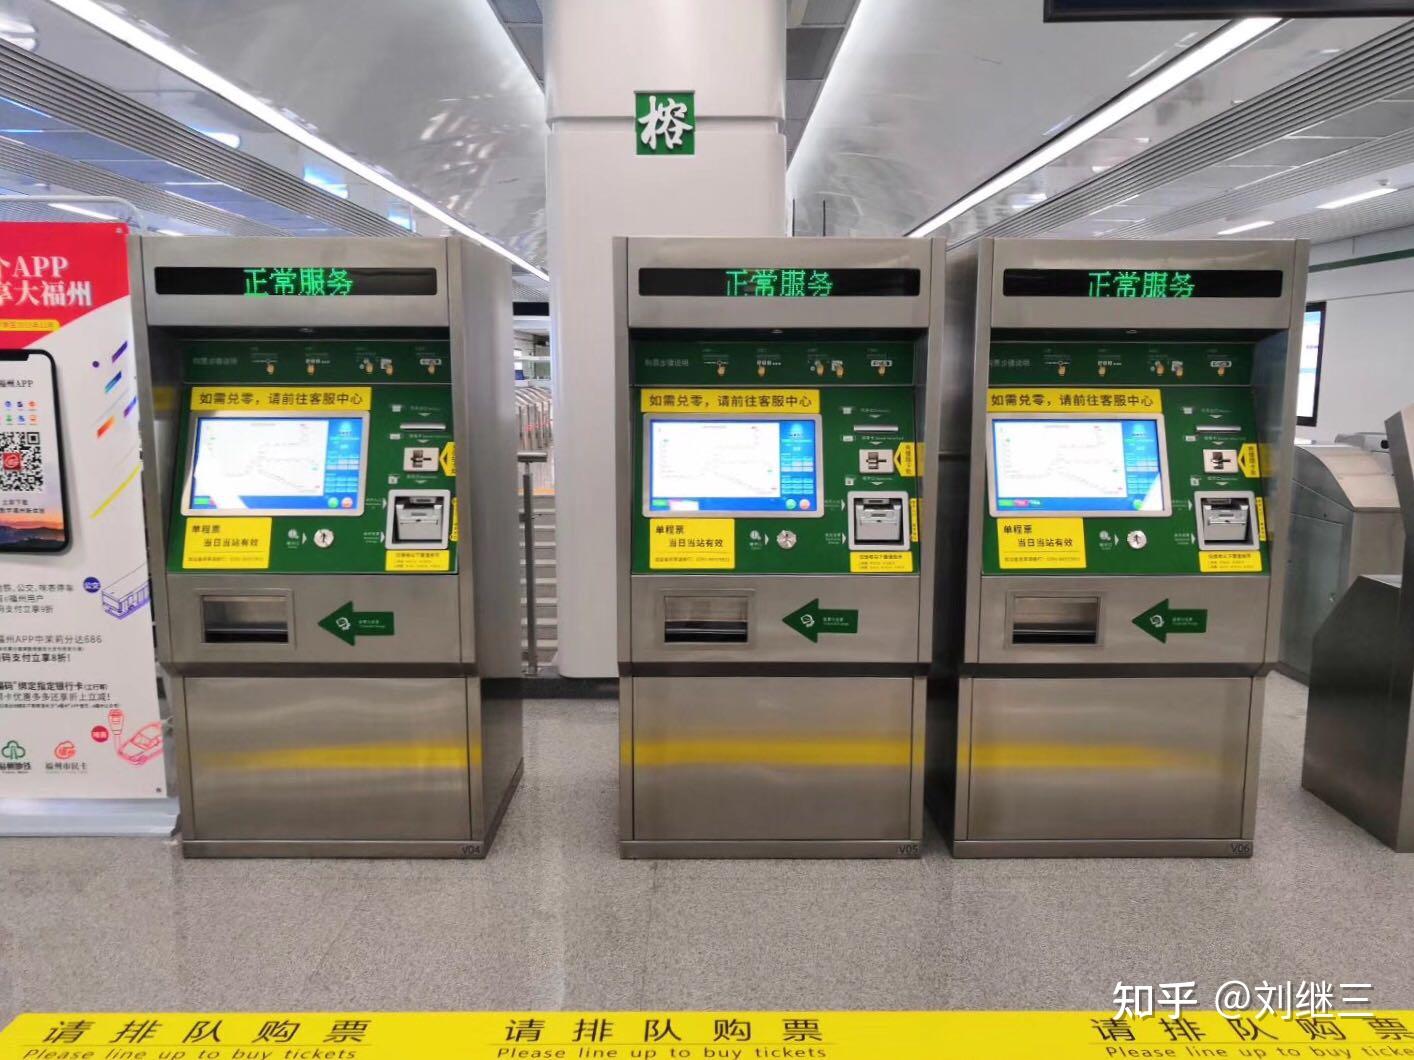 cvm: card vending machine(自动加值机)gate:闸机(进/出口检票机)tvm